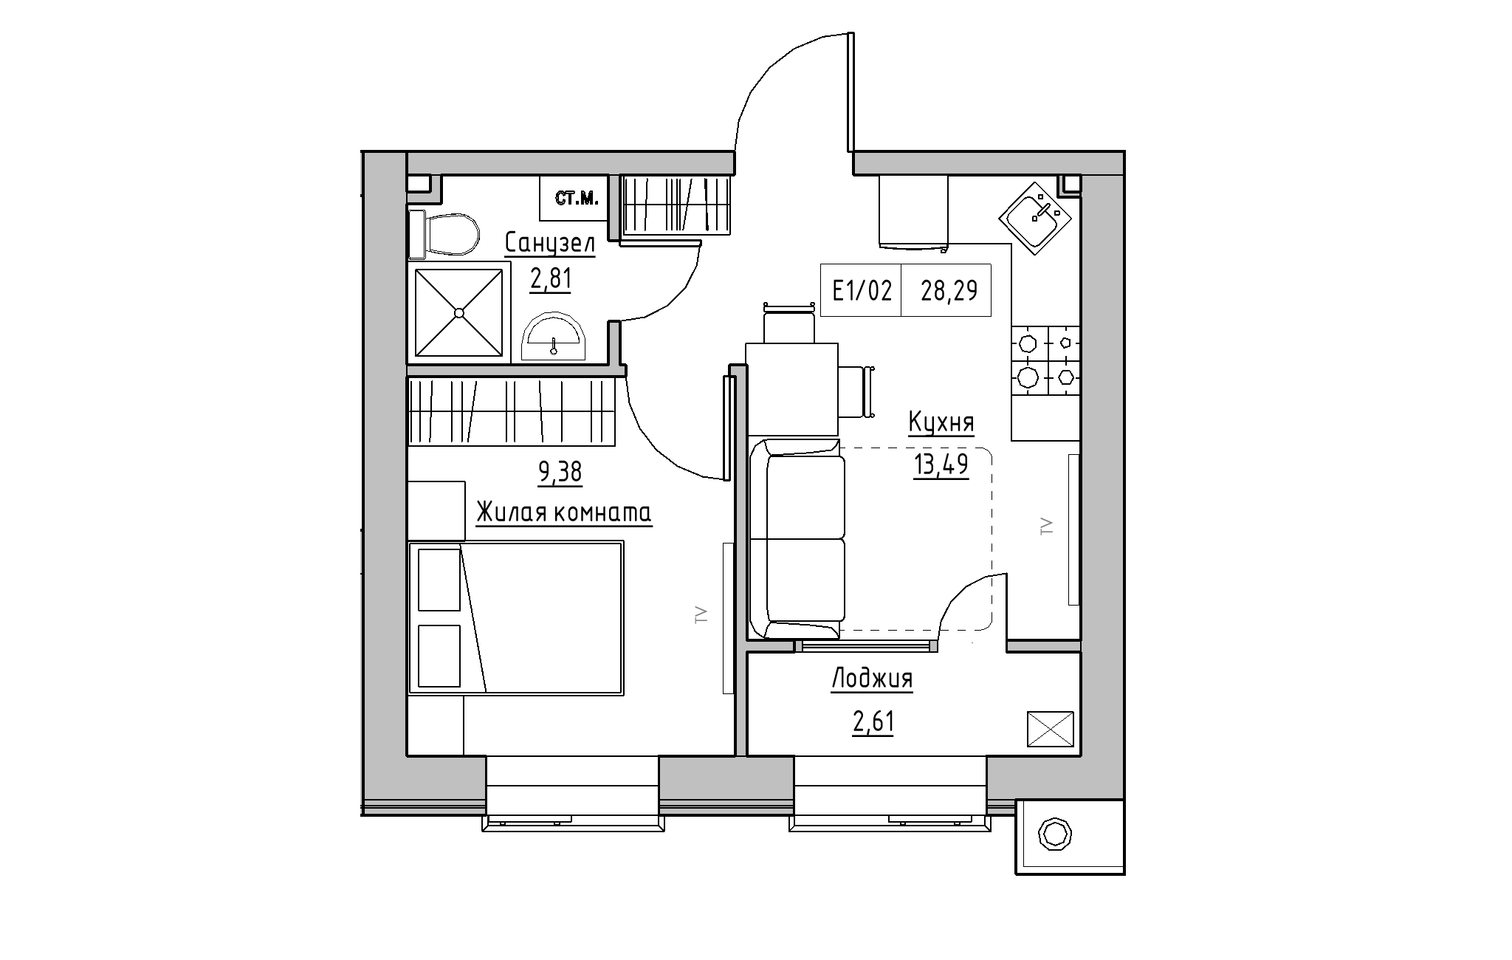 Planning 1-rm flats area 28.29m2, KS-013-02/0013.